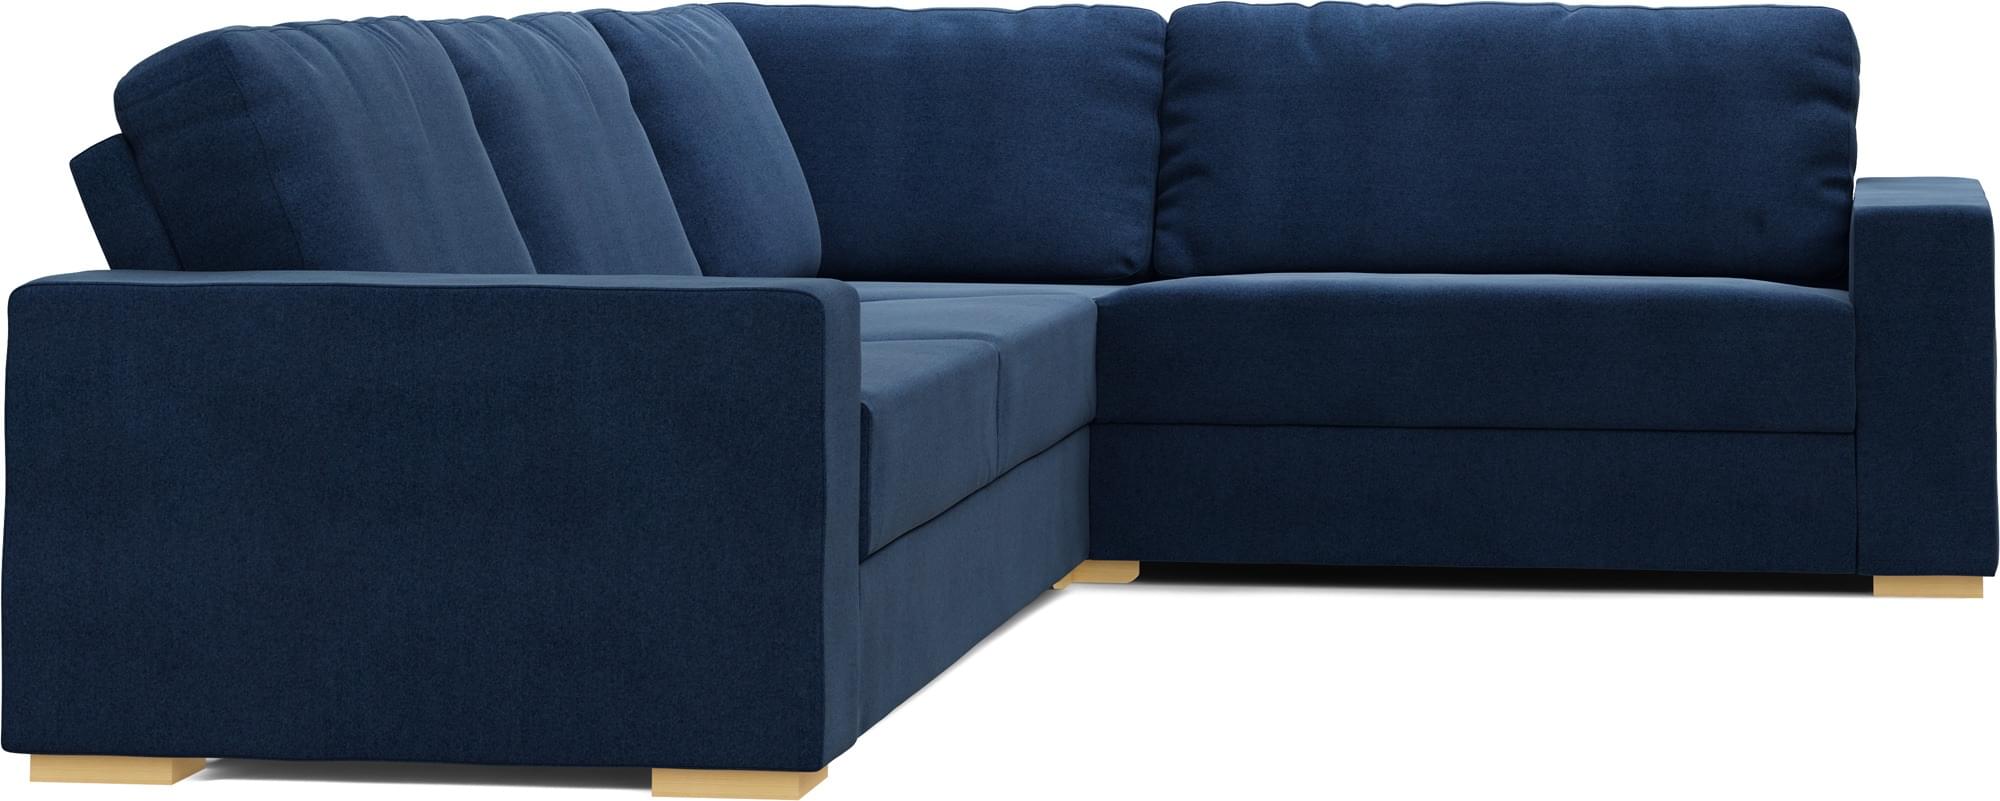 Kai 3X2 Corner Double Sofa Bed